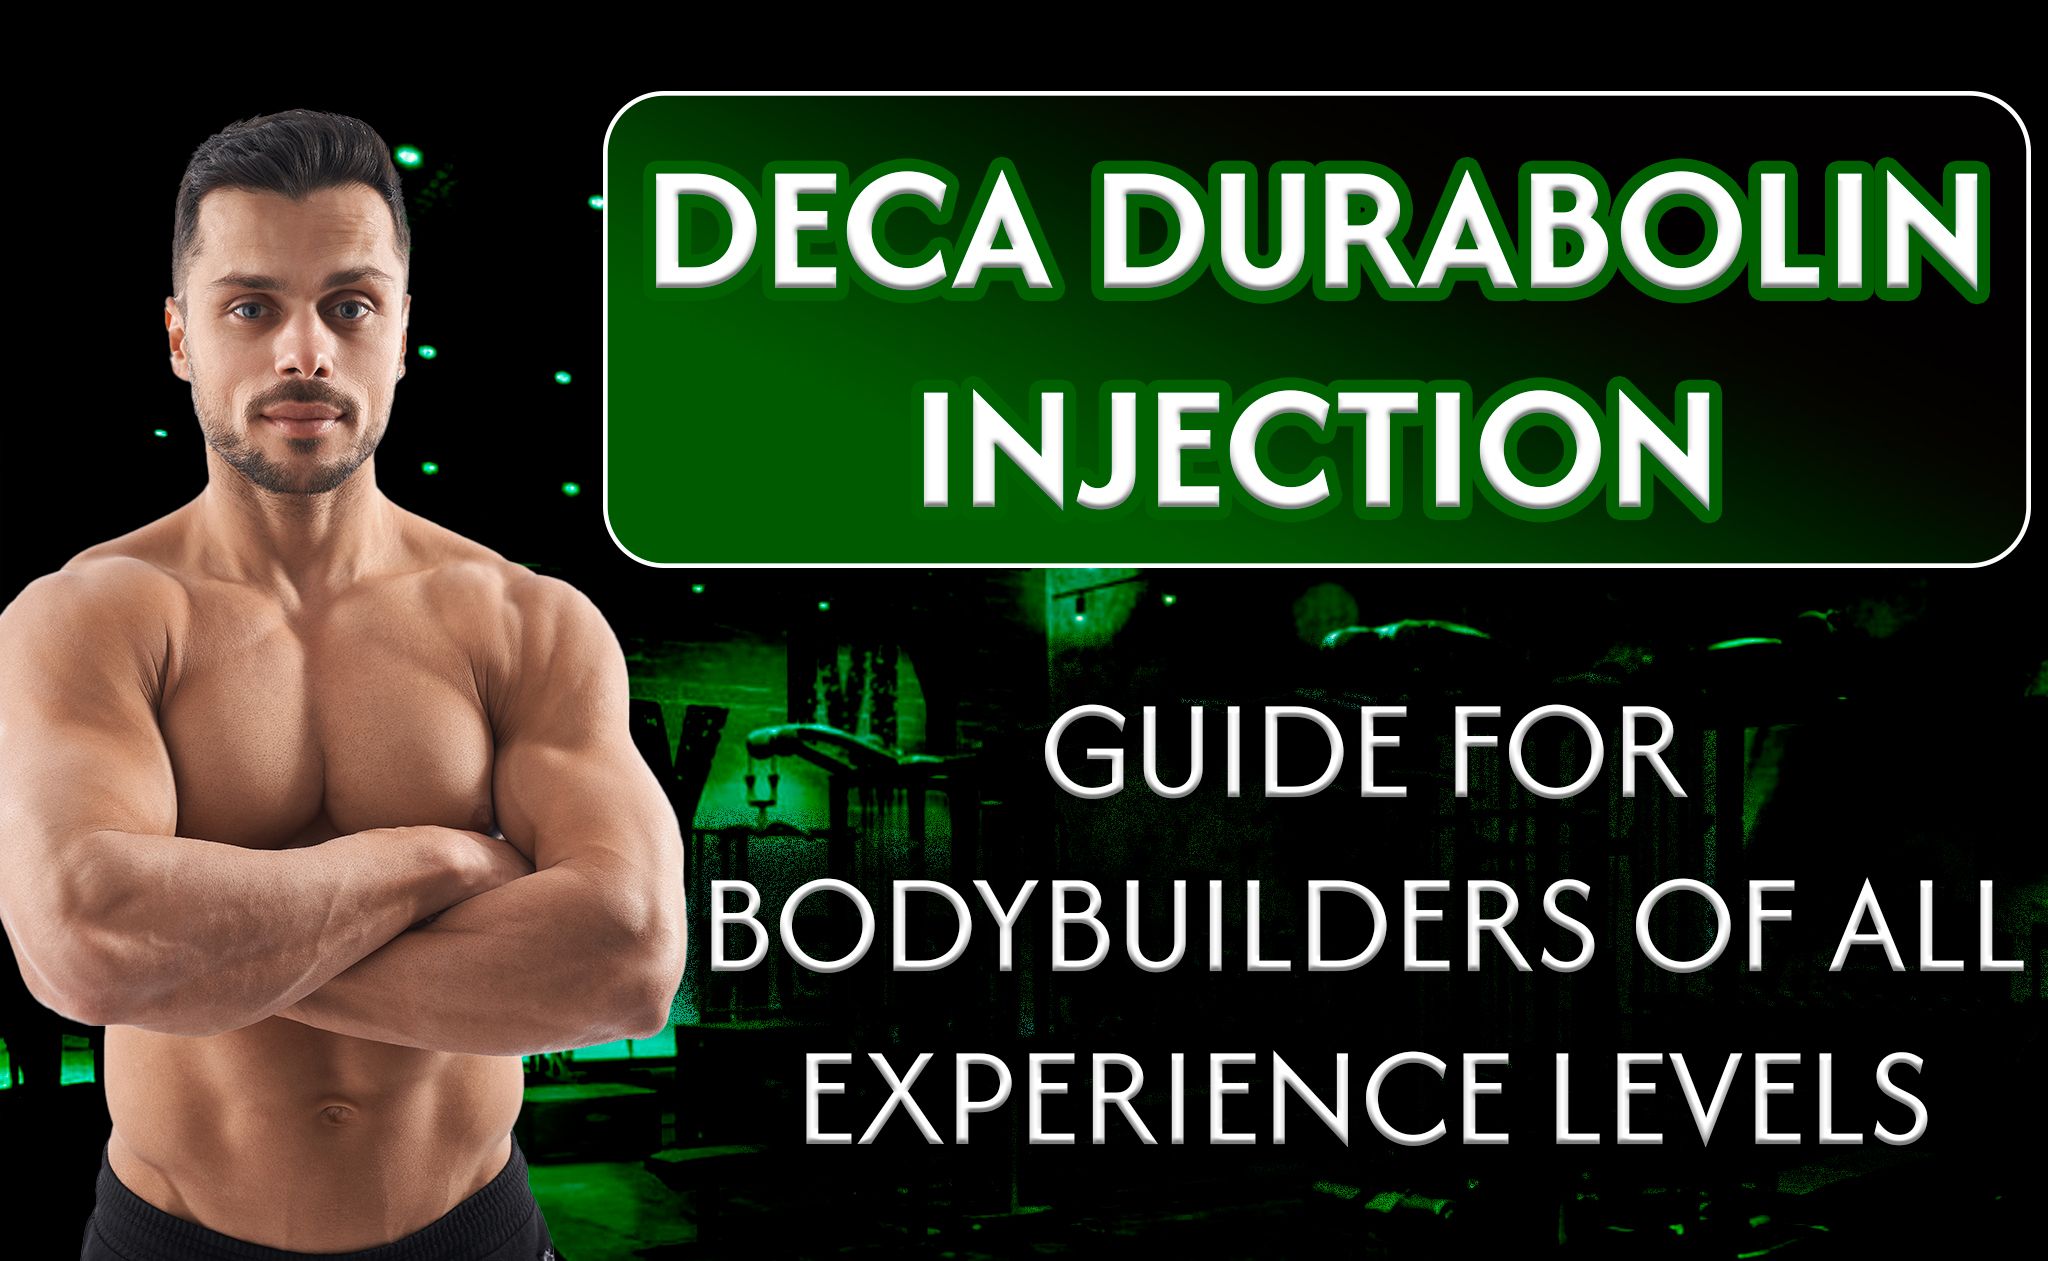 Deca Durabolin injection Benefits